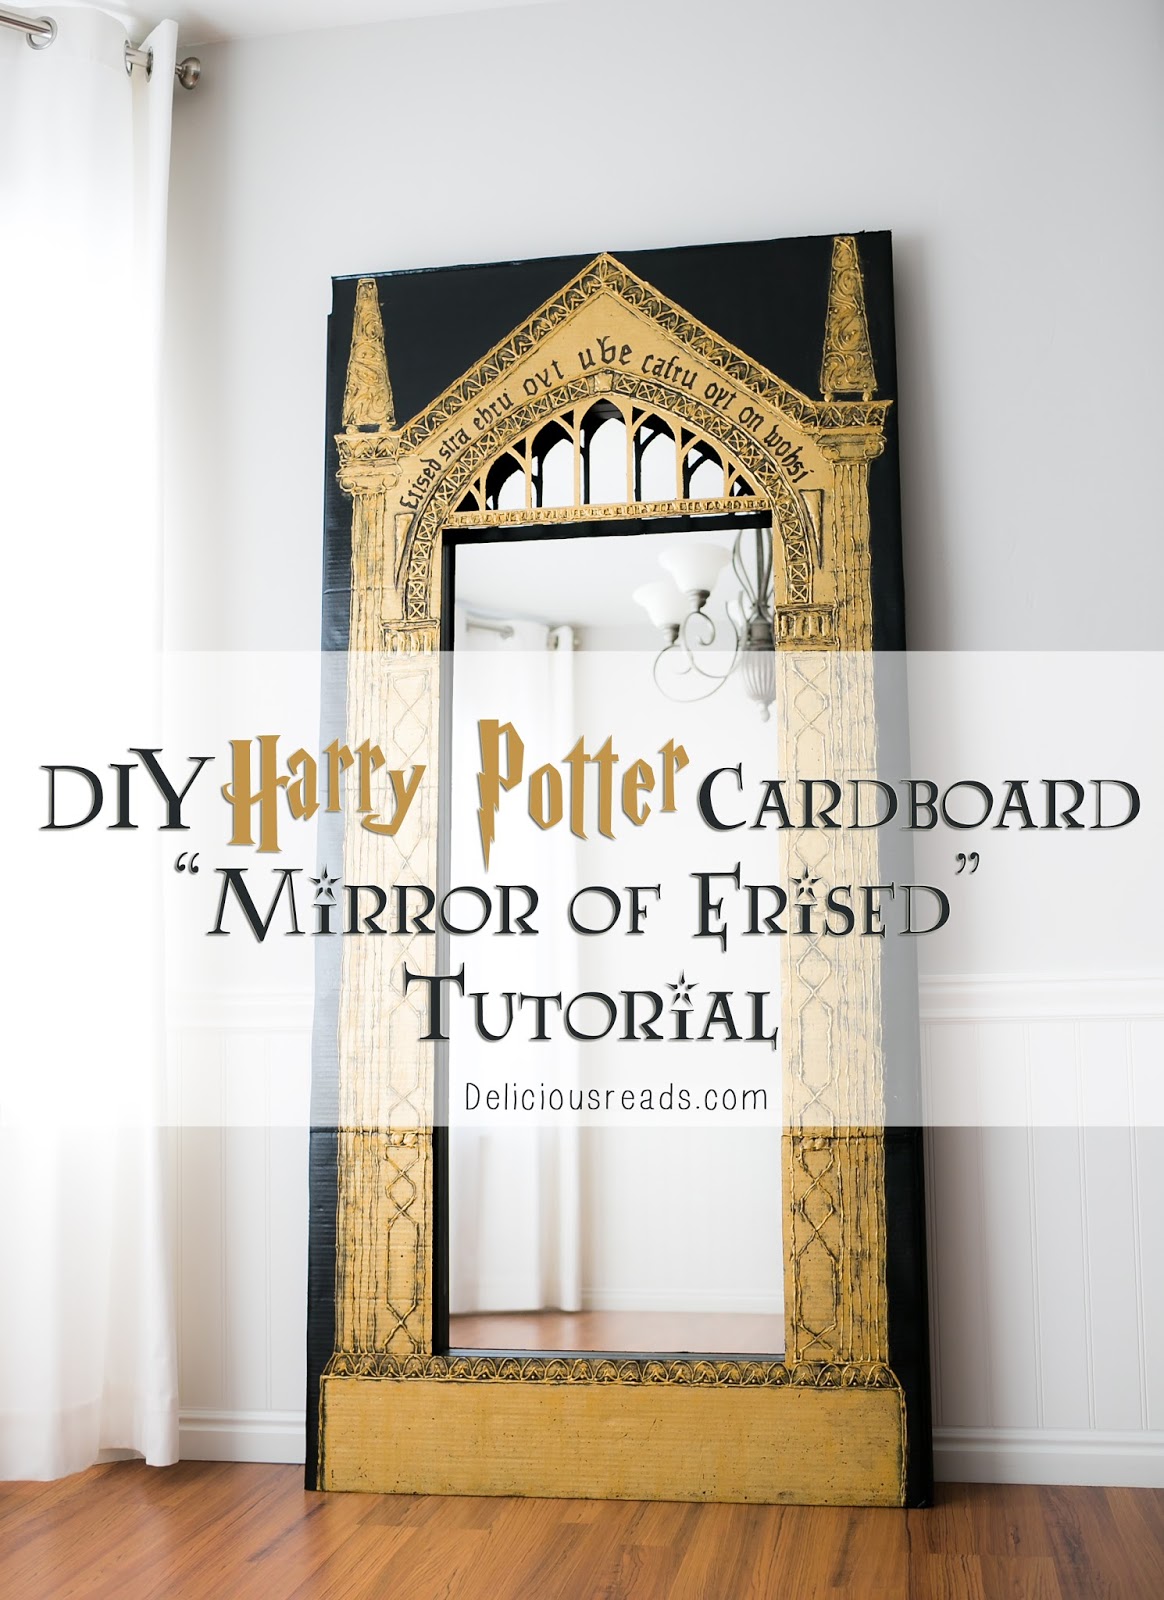 DIY Harry Potter Cardboard Mirror of Erised